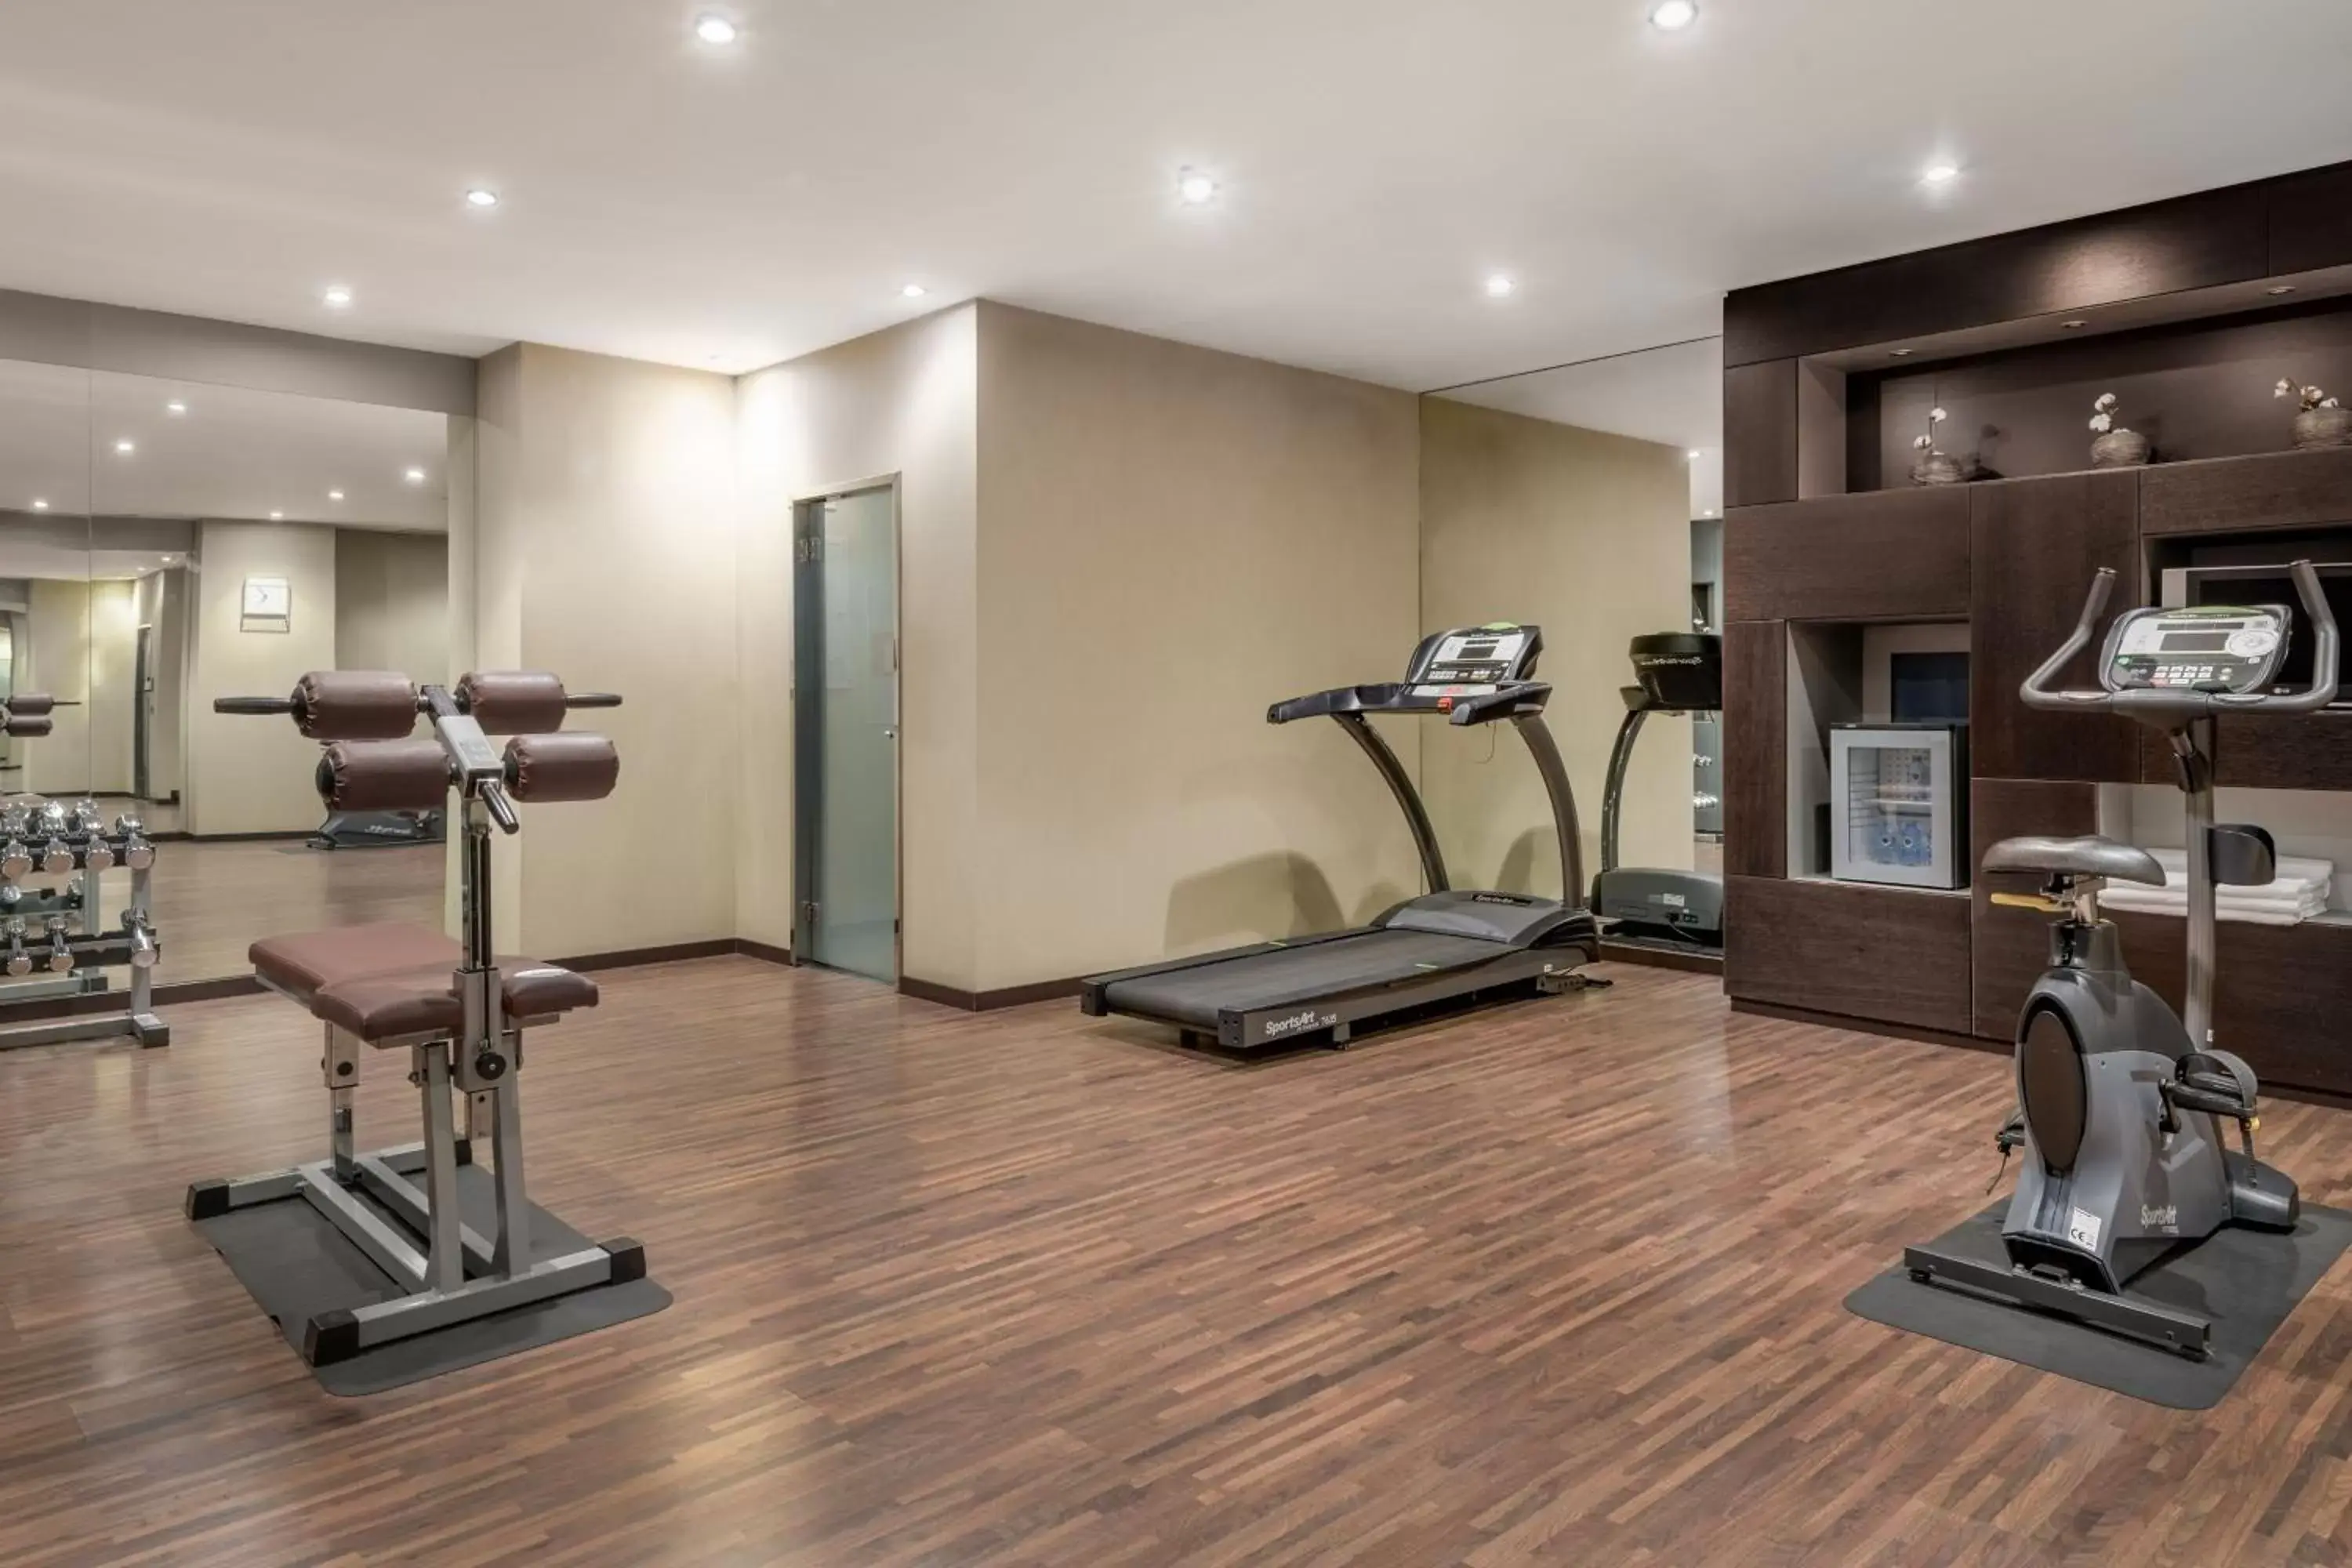 Fitness centre/facilities, Fitness Center/Facilities in AC Hotel Elda by Marriott